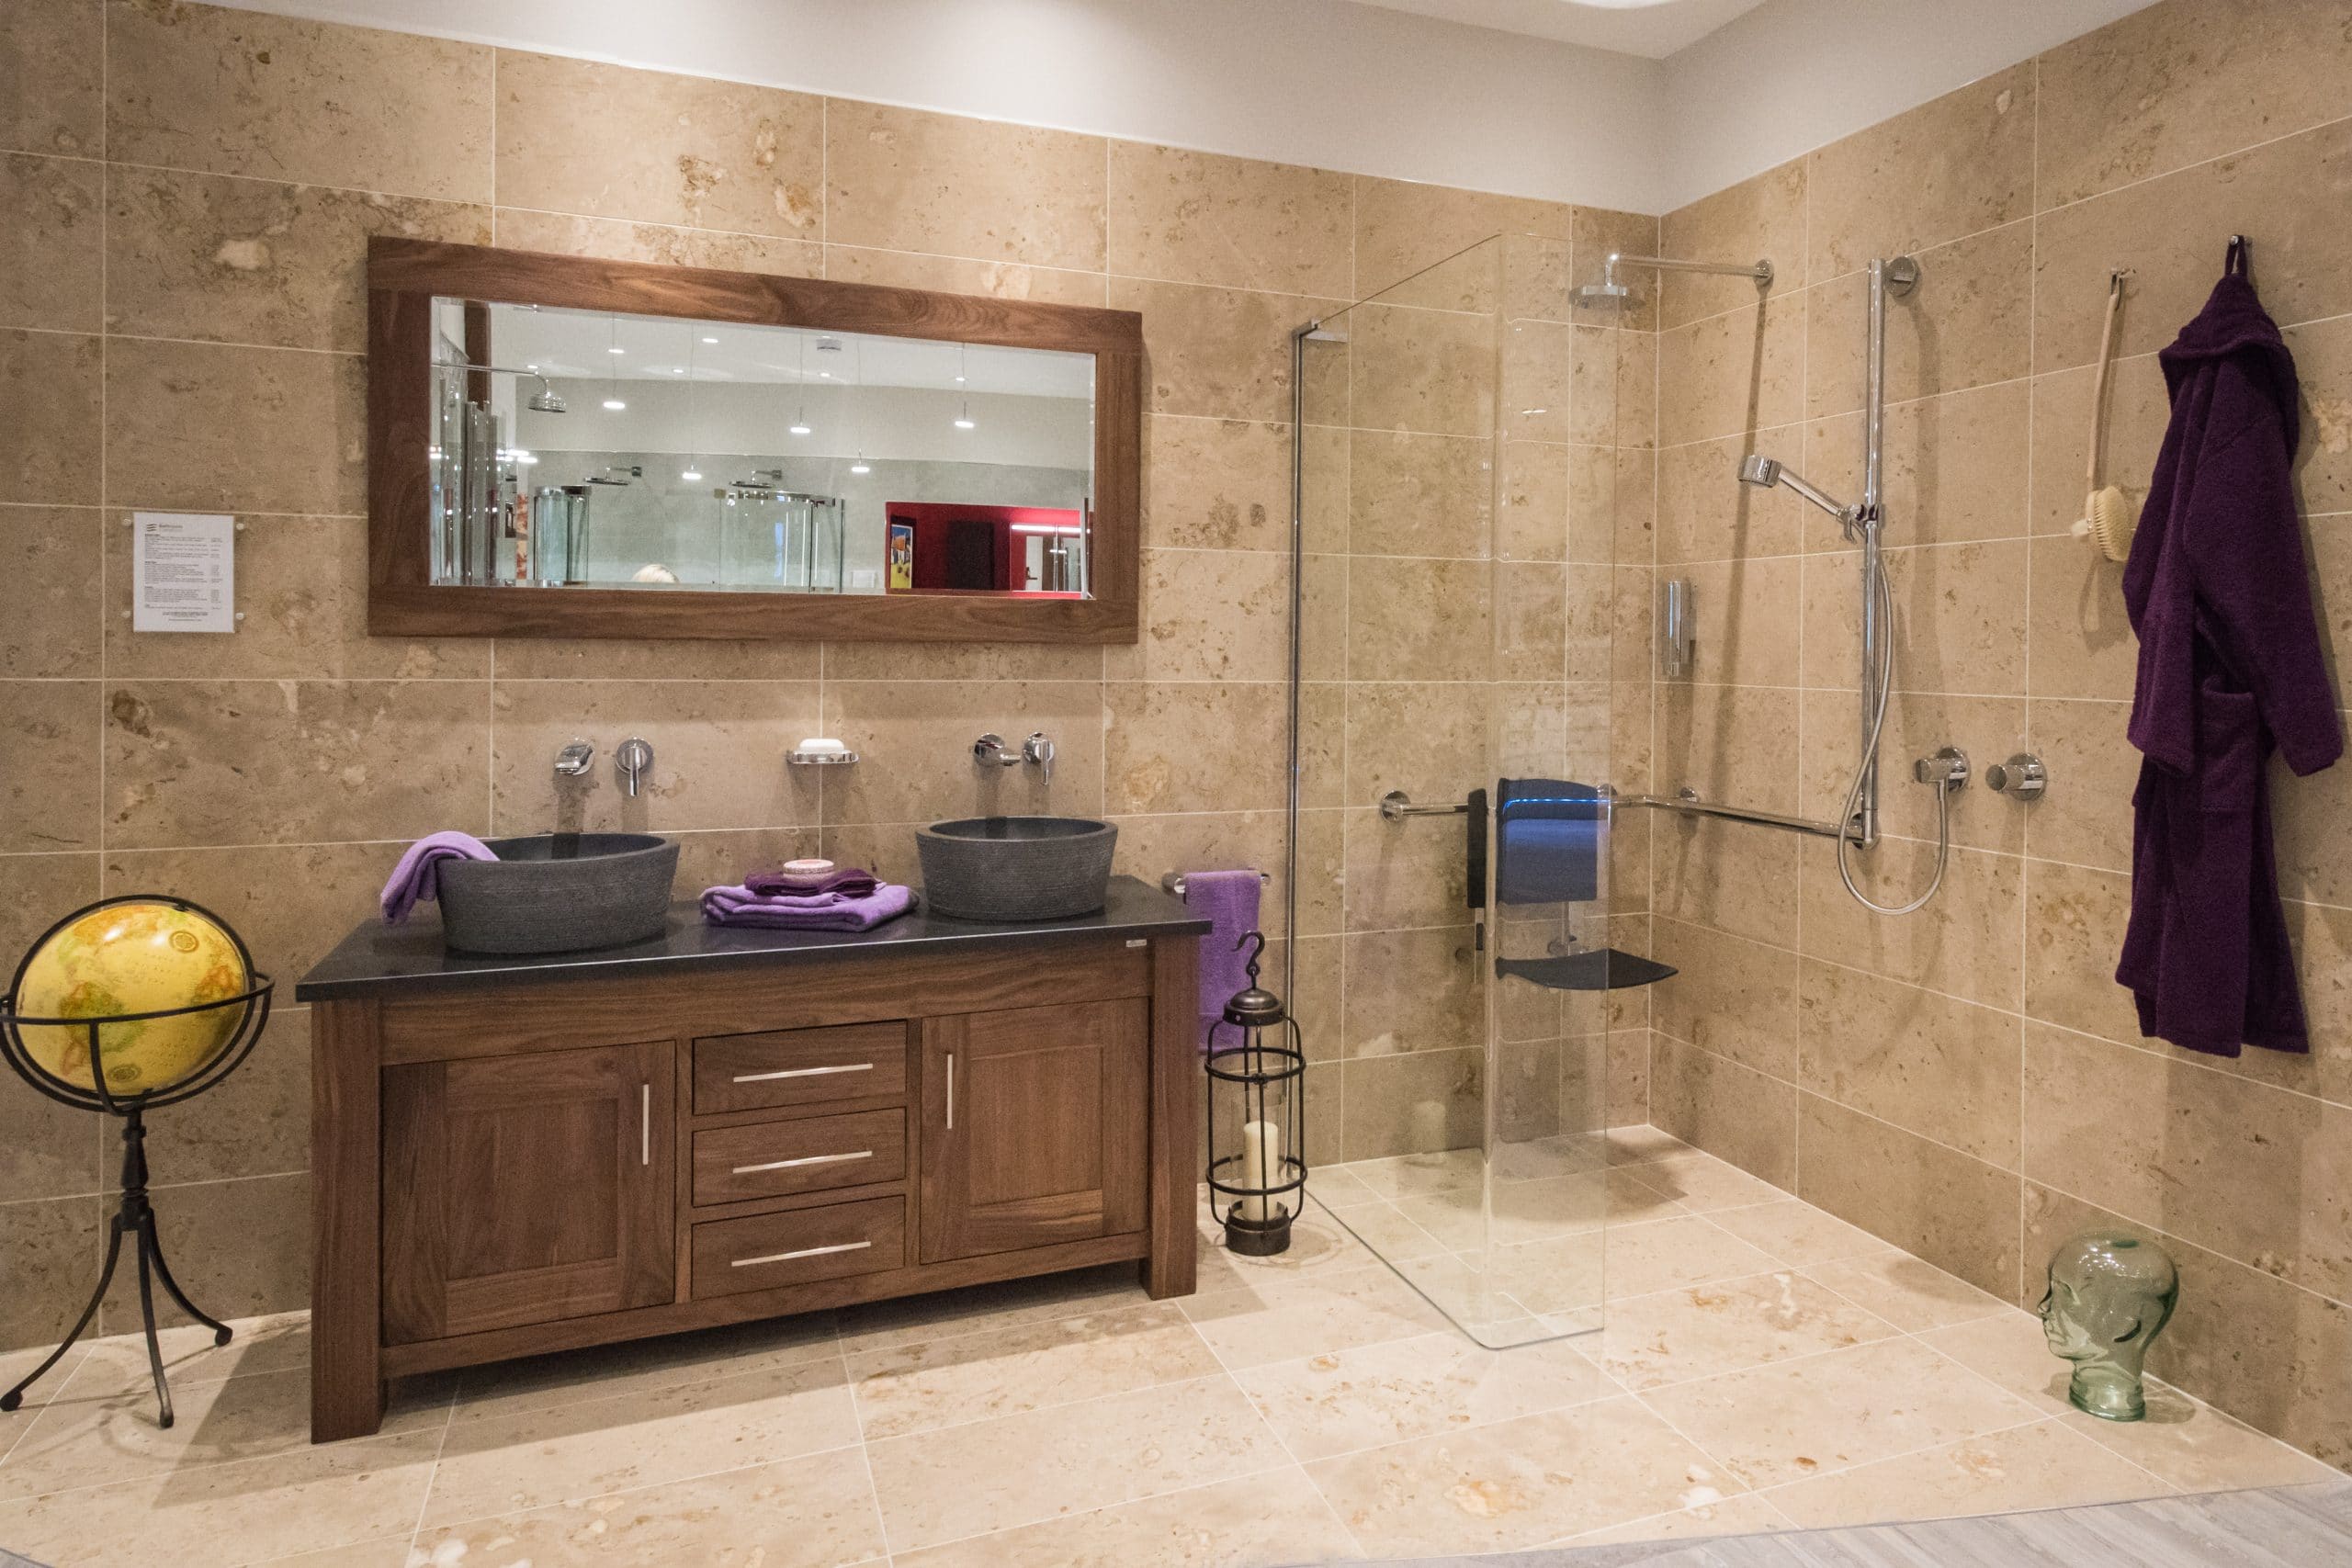 Accessible Bathroom - Keuco Plan Care - Shower chair, handrails, marble tiles